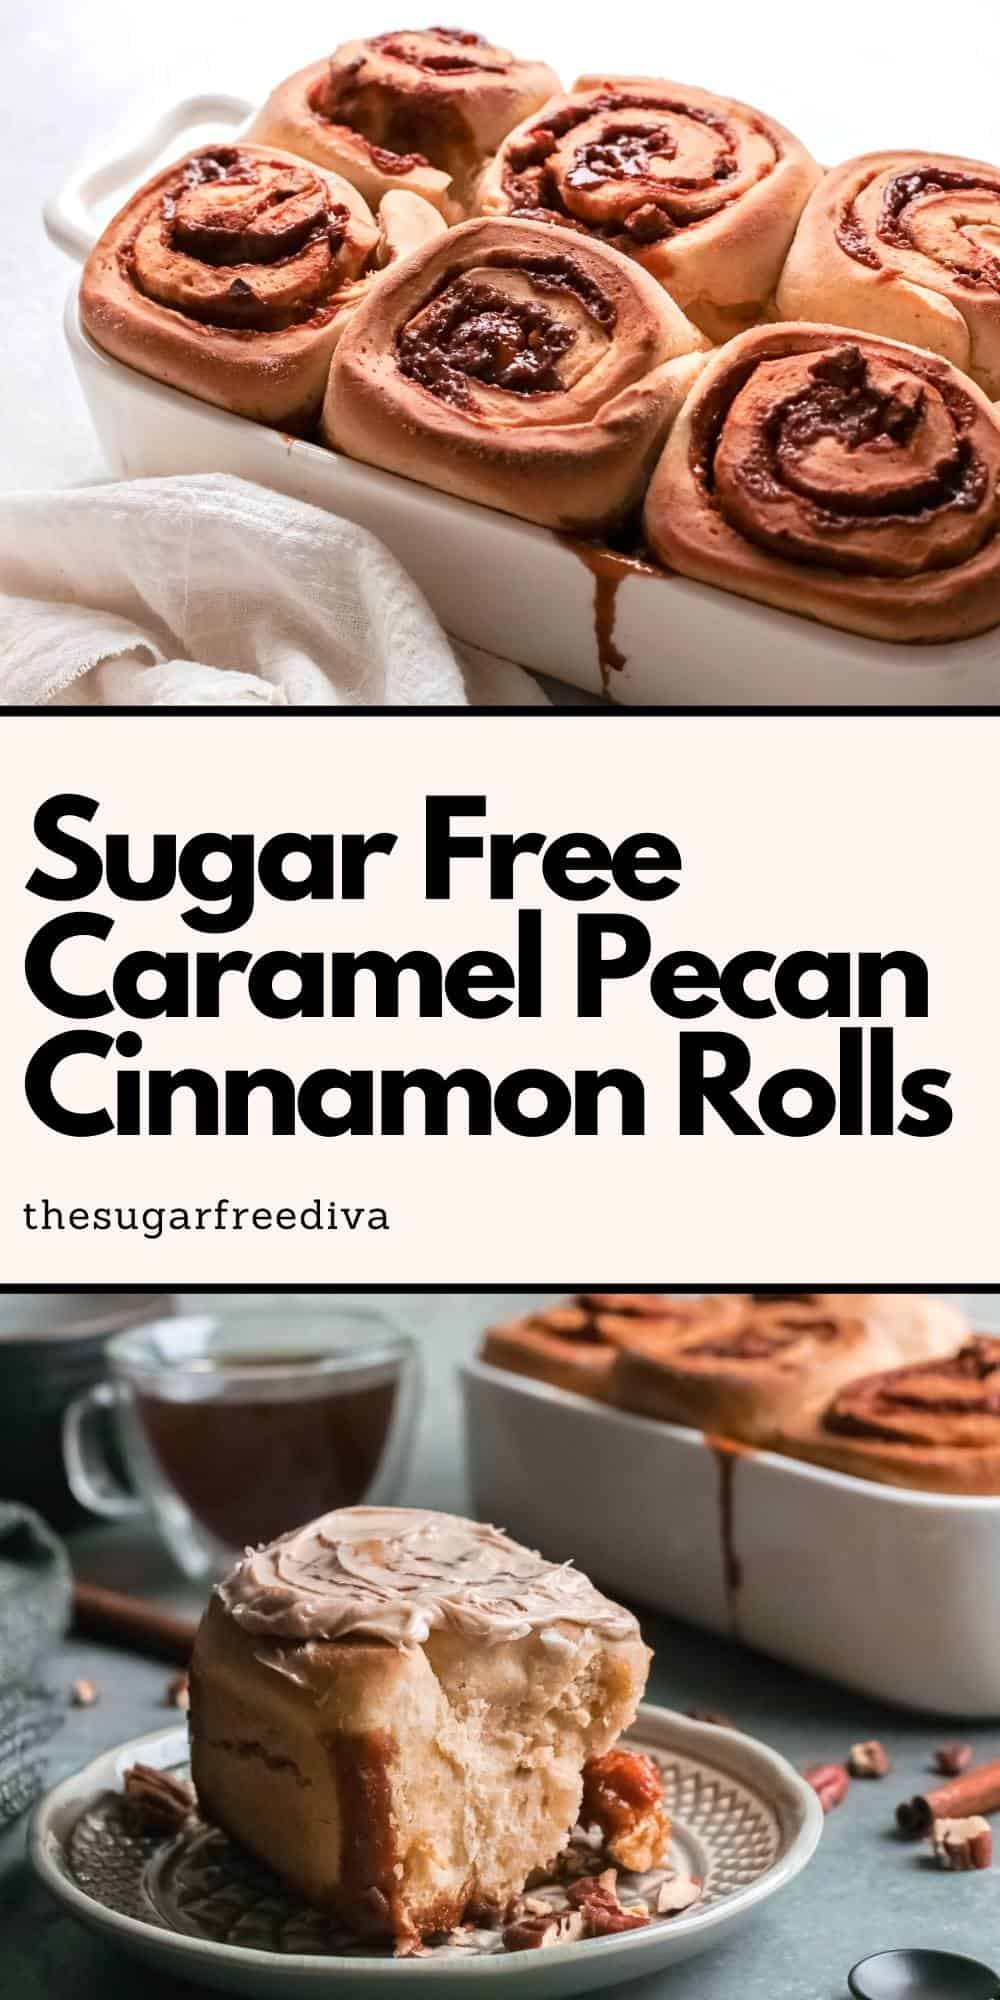 Sugar Free Caramel Pecan Cinnamon Rolls